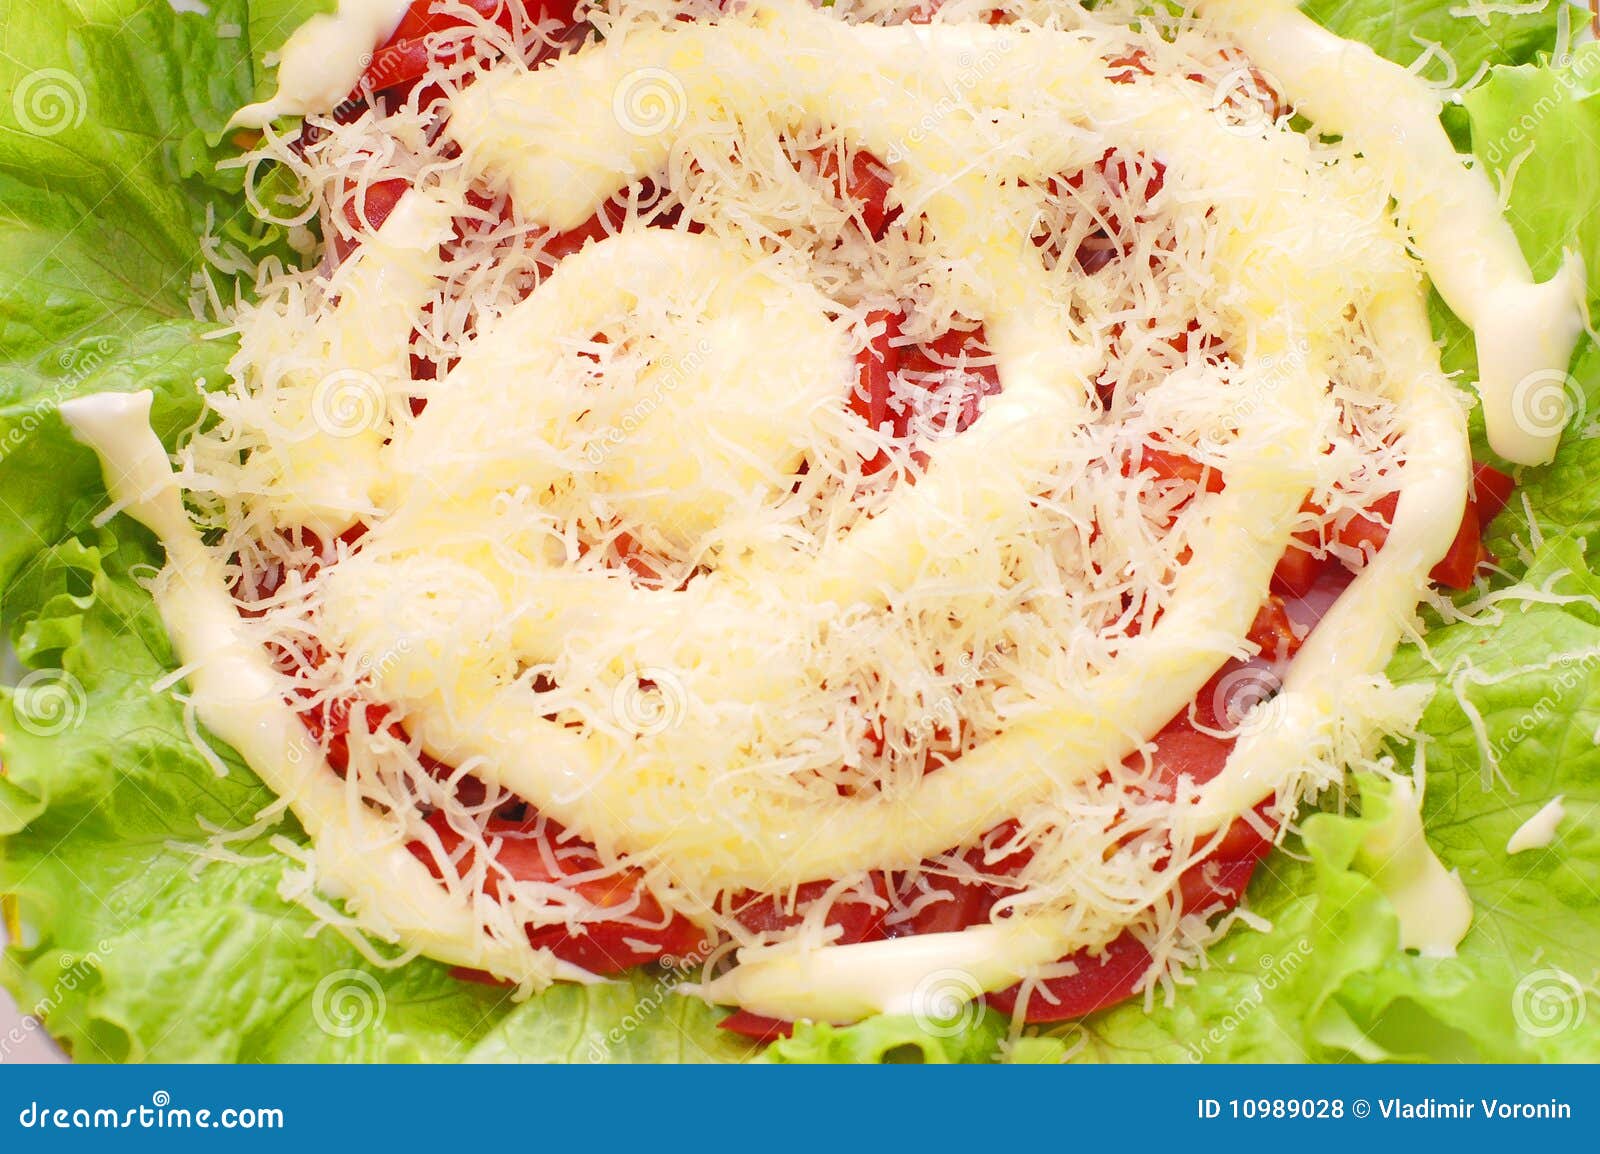 salad consists of tomatos, ground cheese